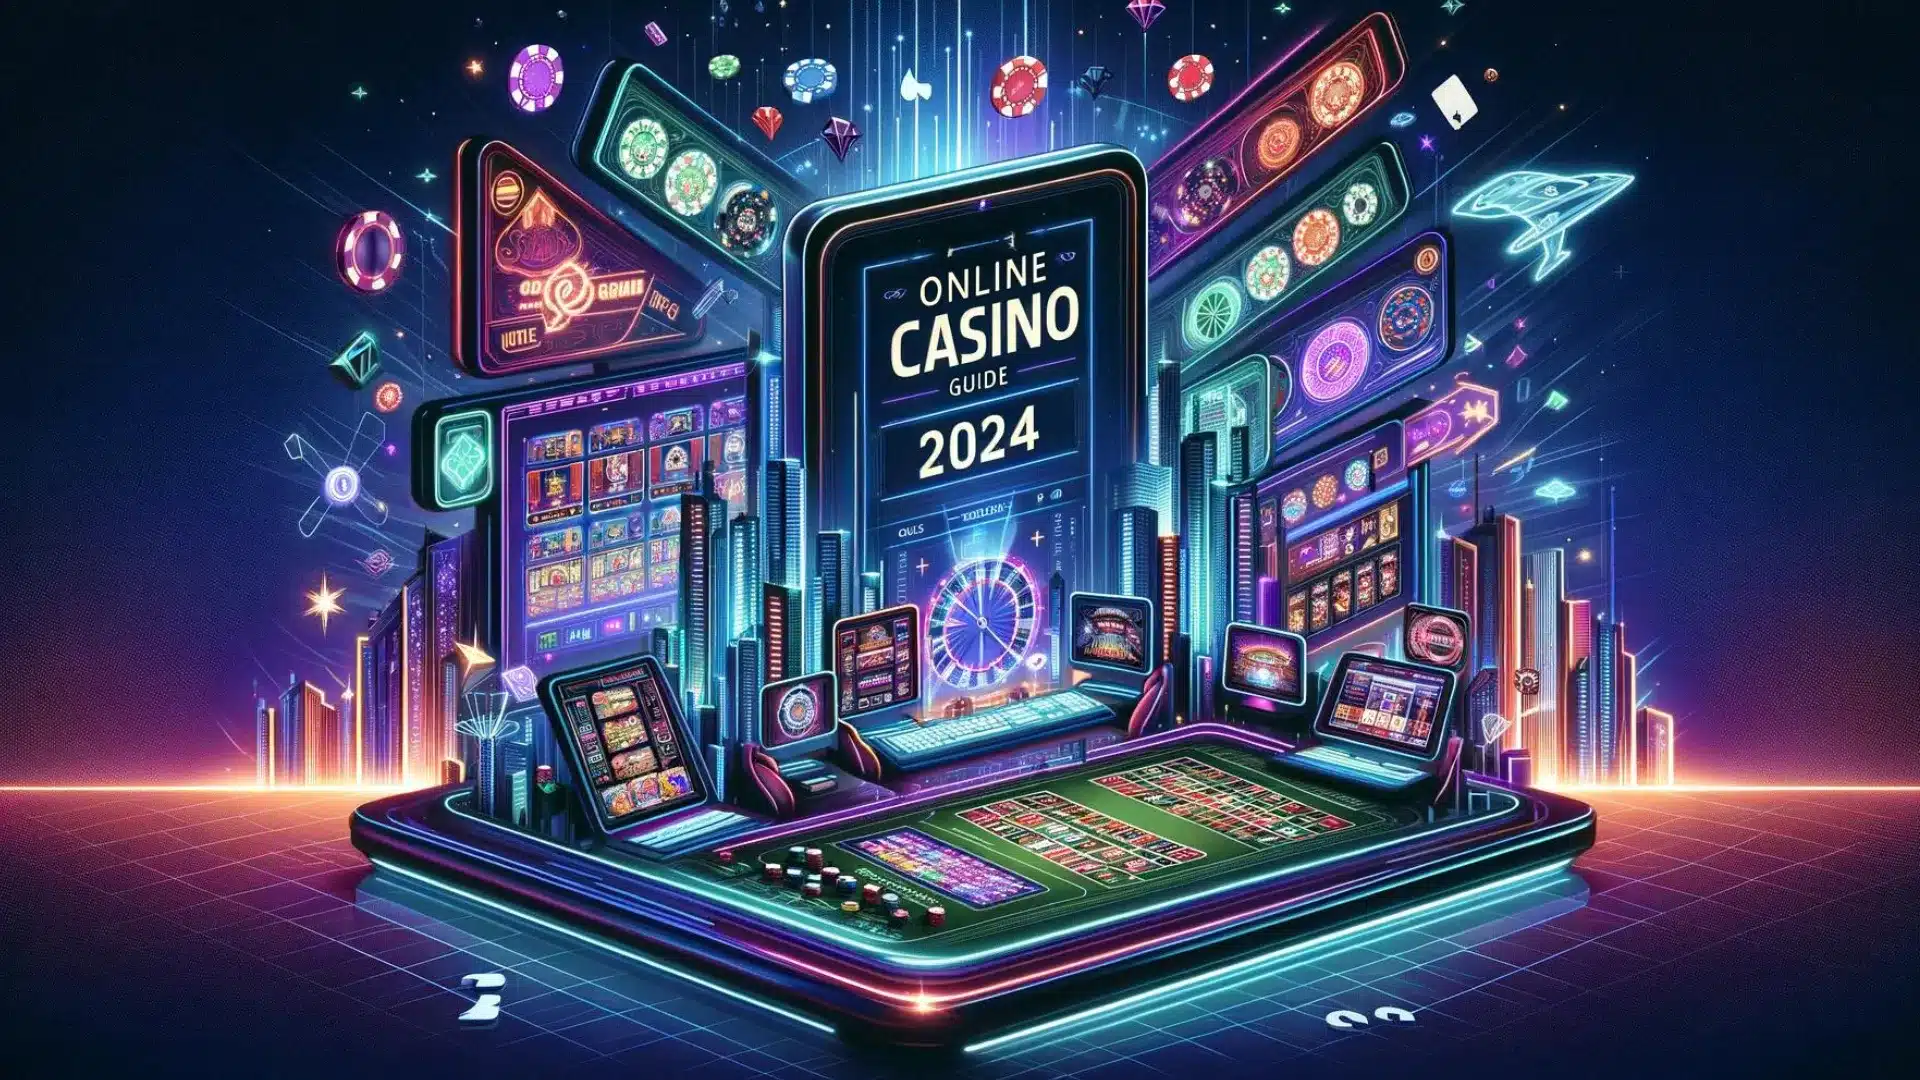 Online Casino Guide for 2024